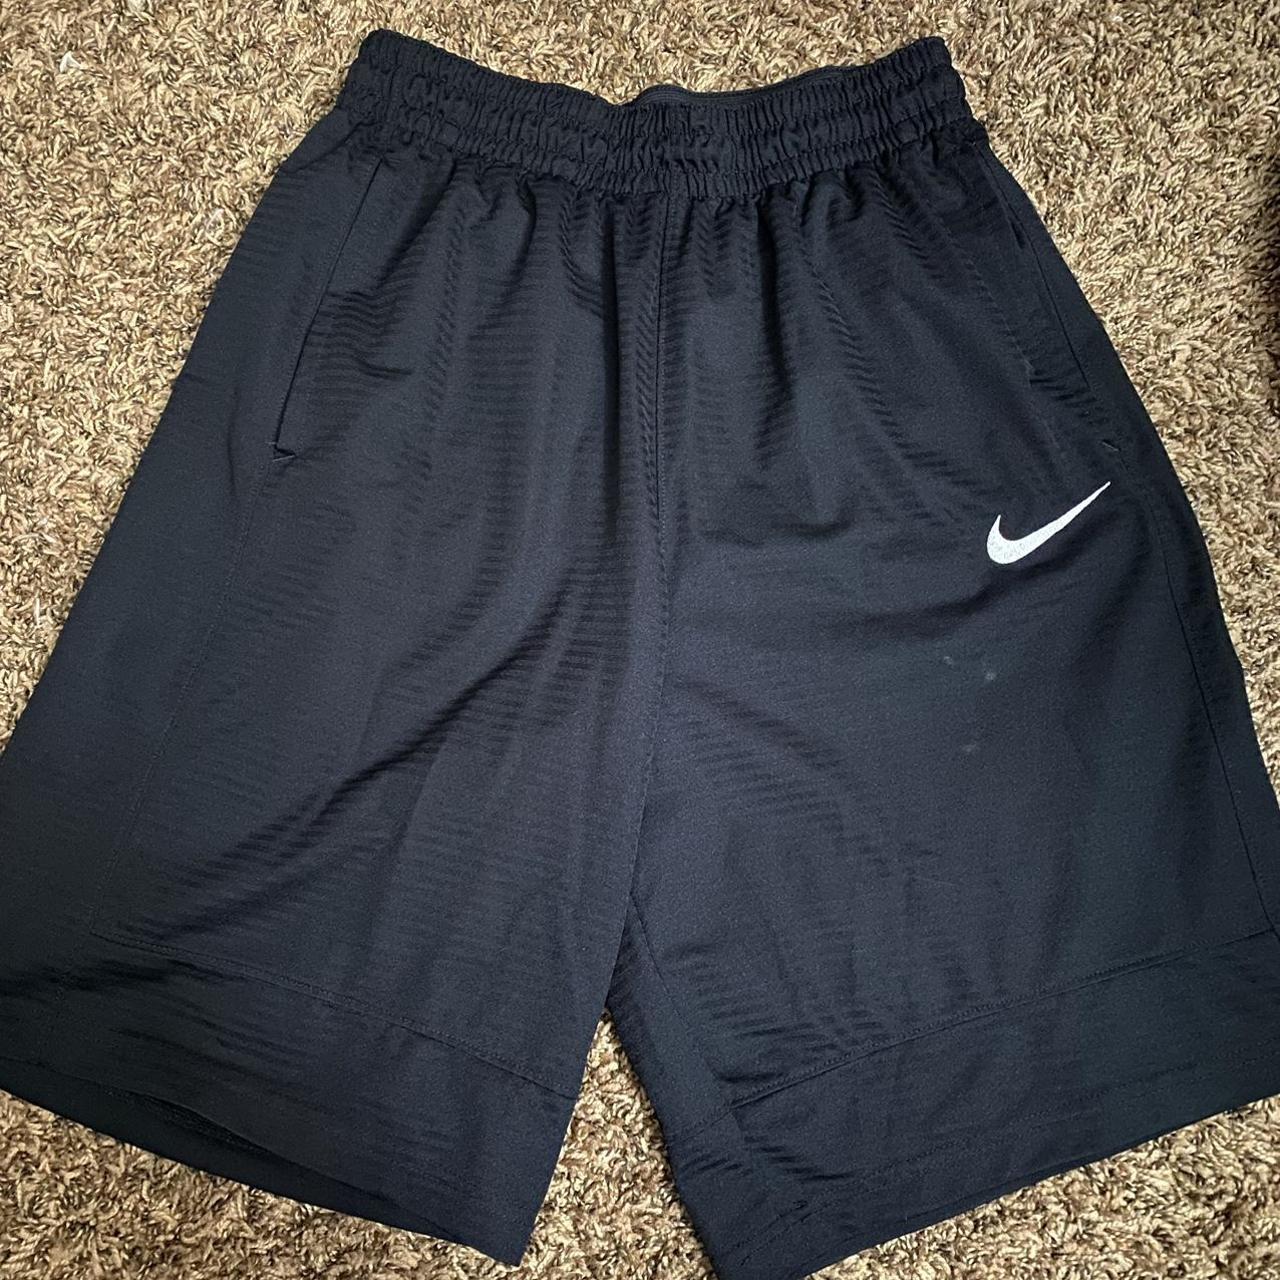 black nike shorts men’s basketball shorts size medium - Depop